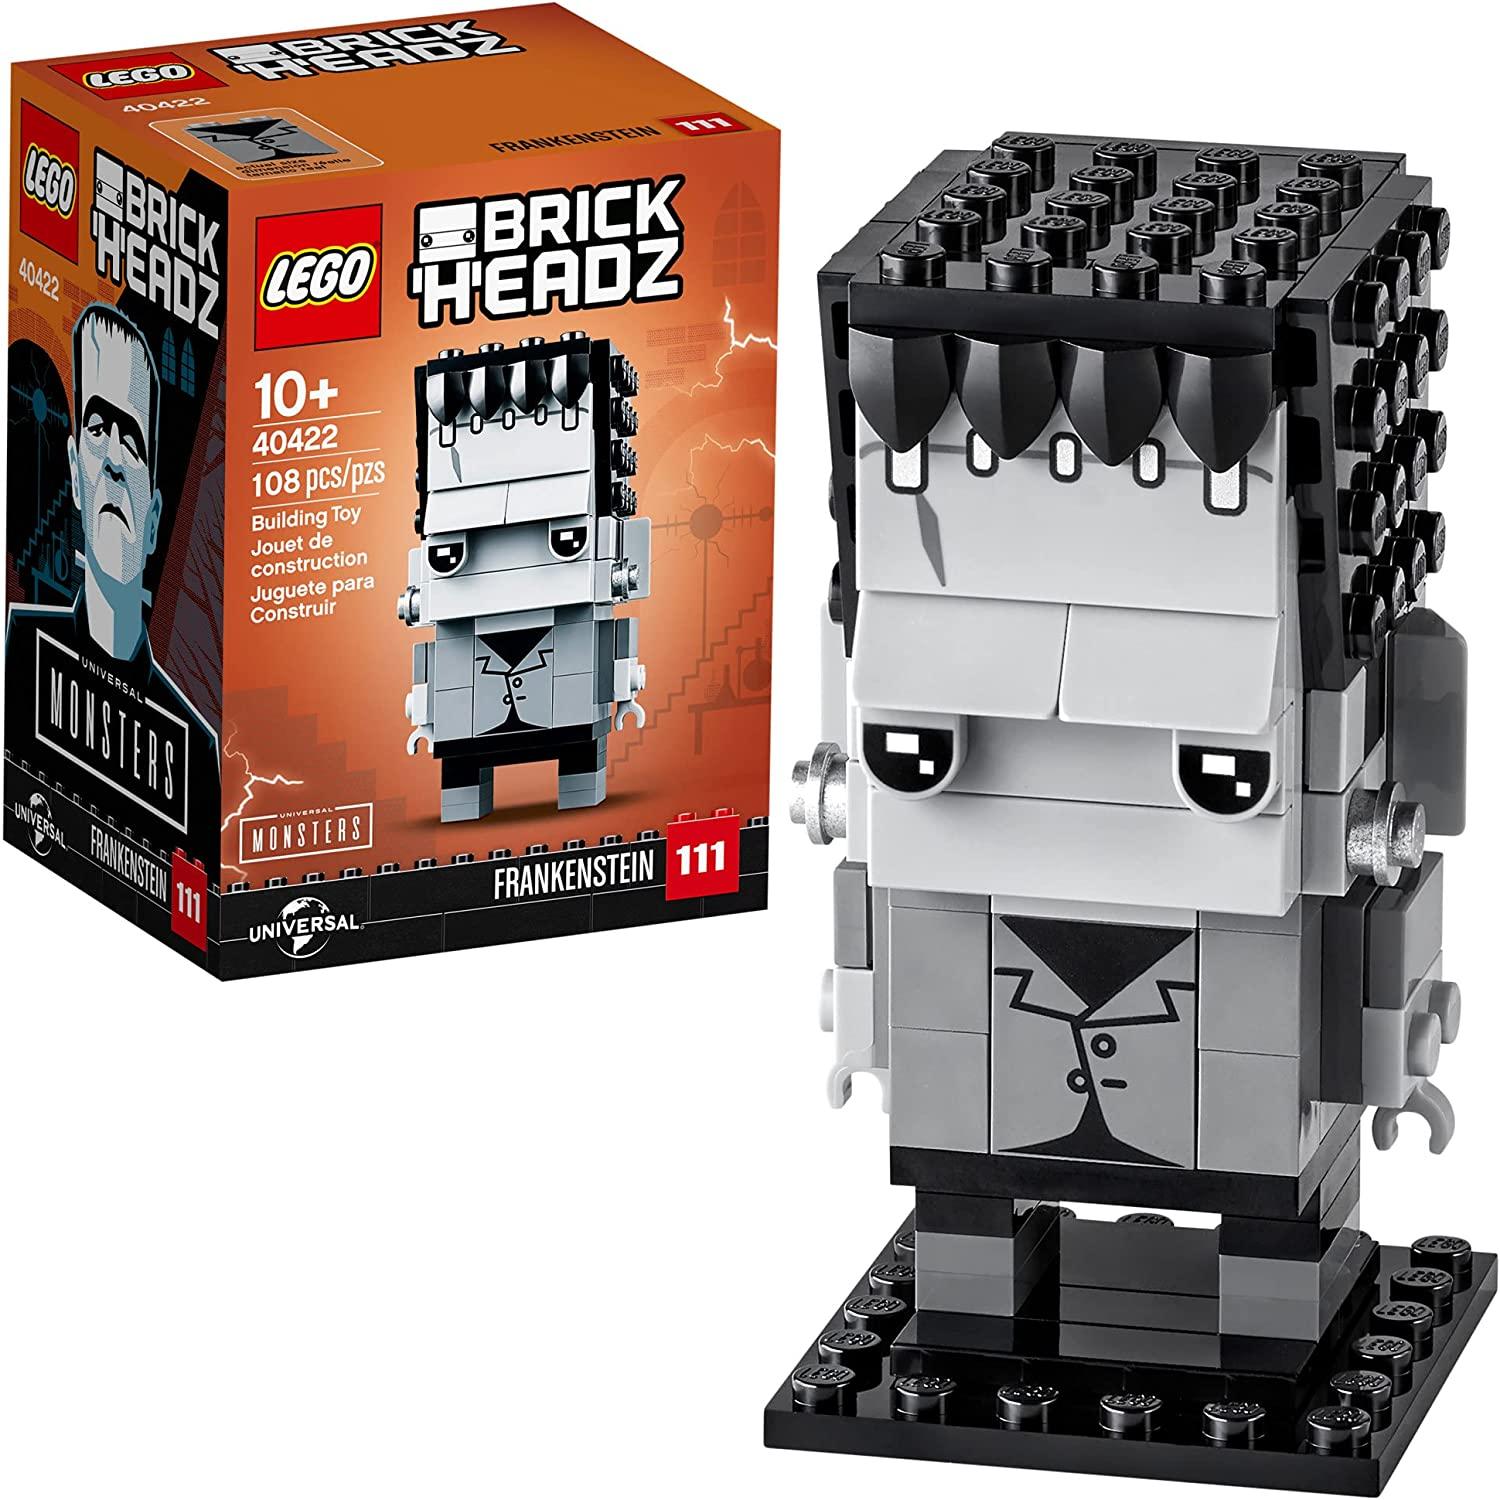 LEGO BrickHeadz Frankenstein 40422 Building Kit for $6.99